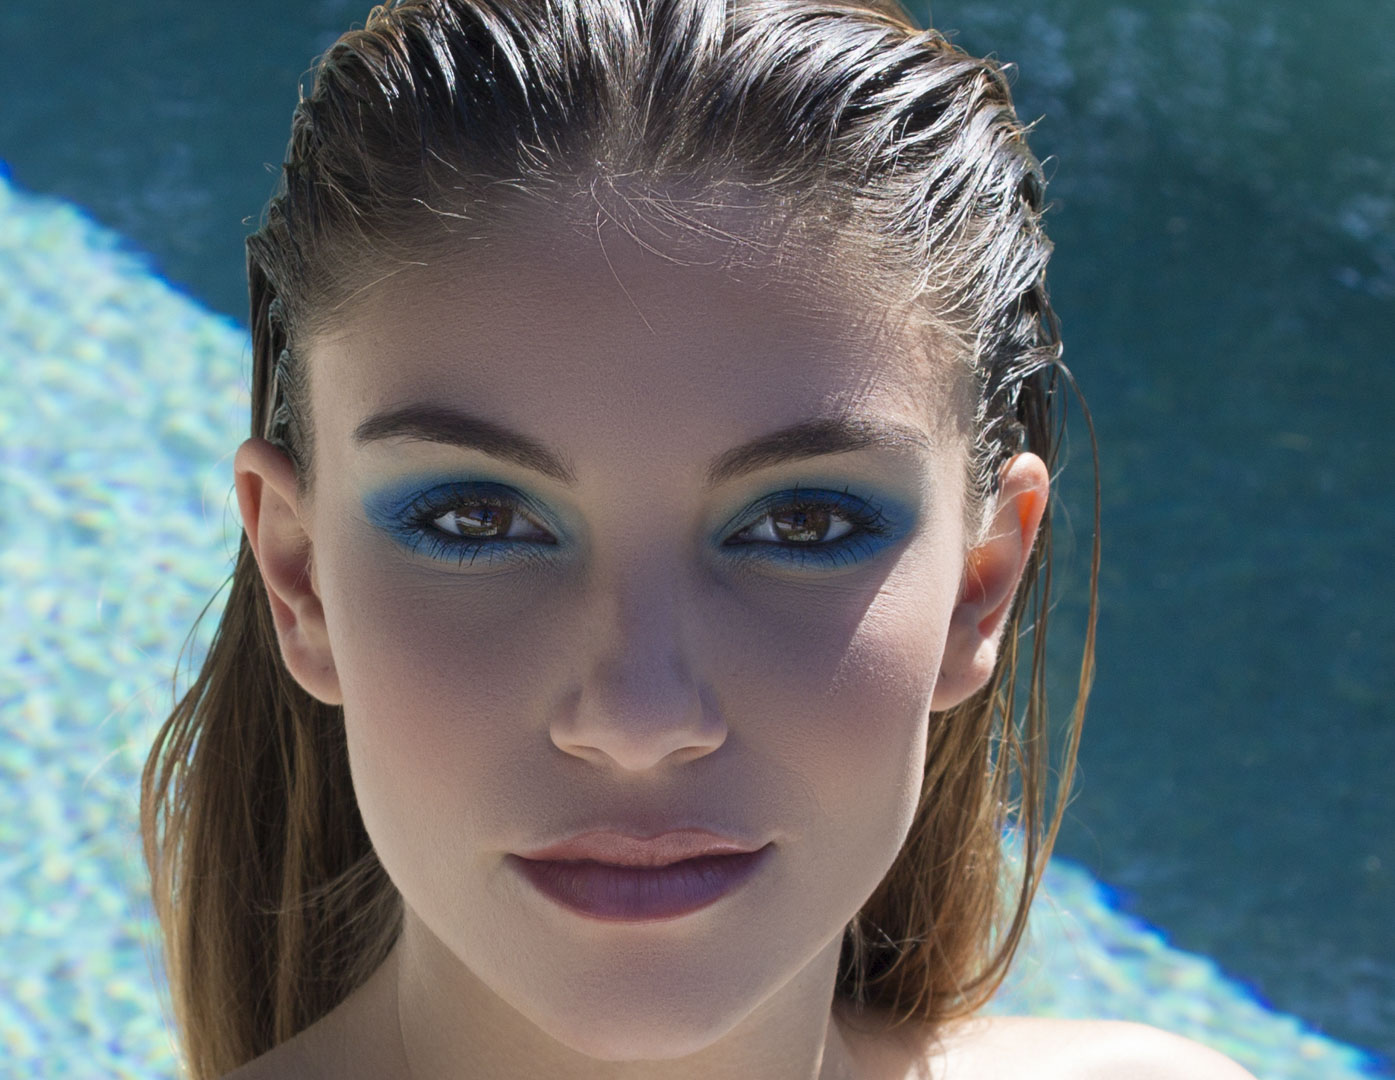 Make-up artist Lucrezia Bianchini